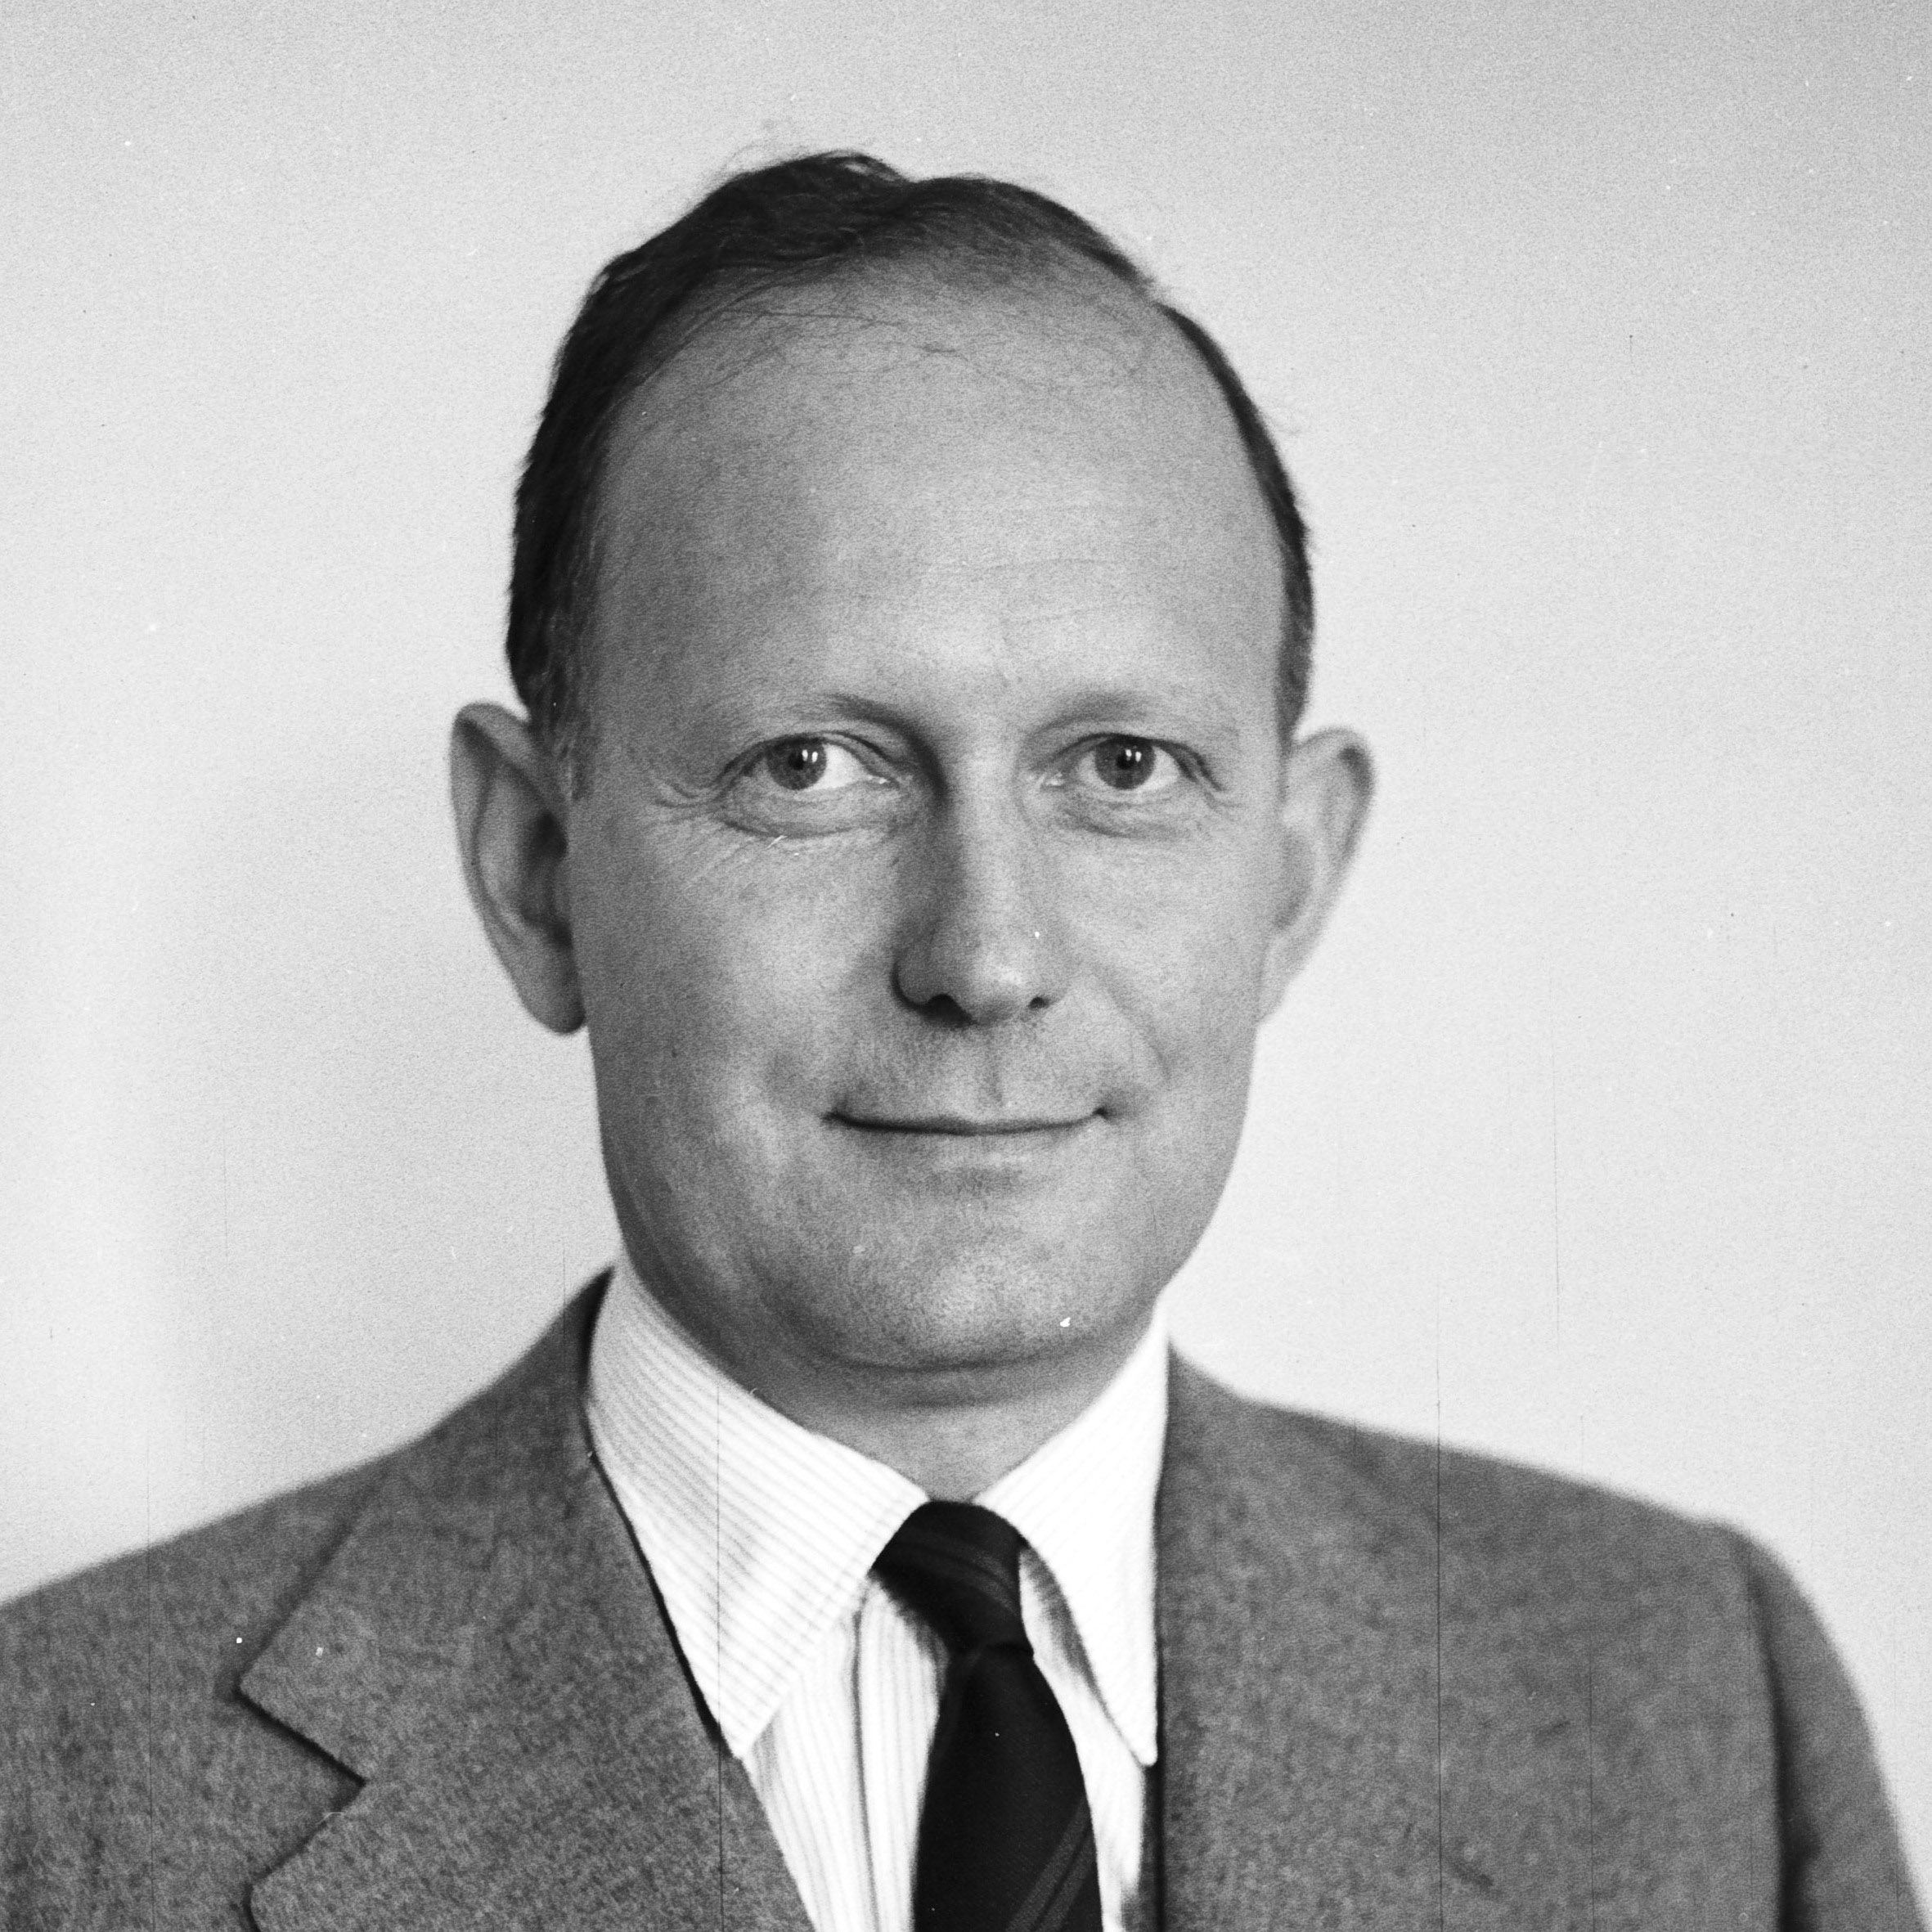 headshot of C. Douglas “Doug” Dillon